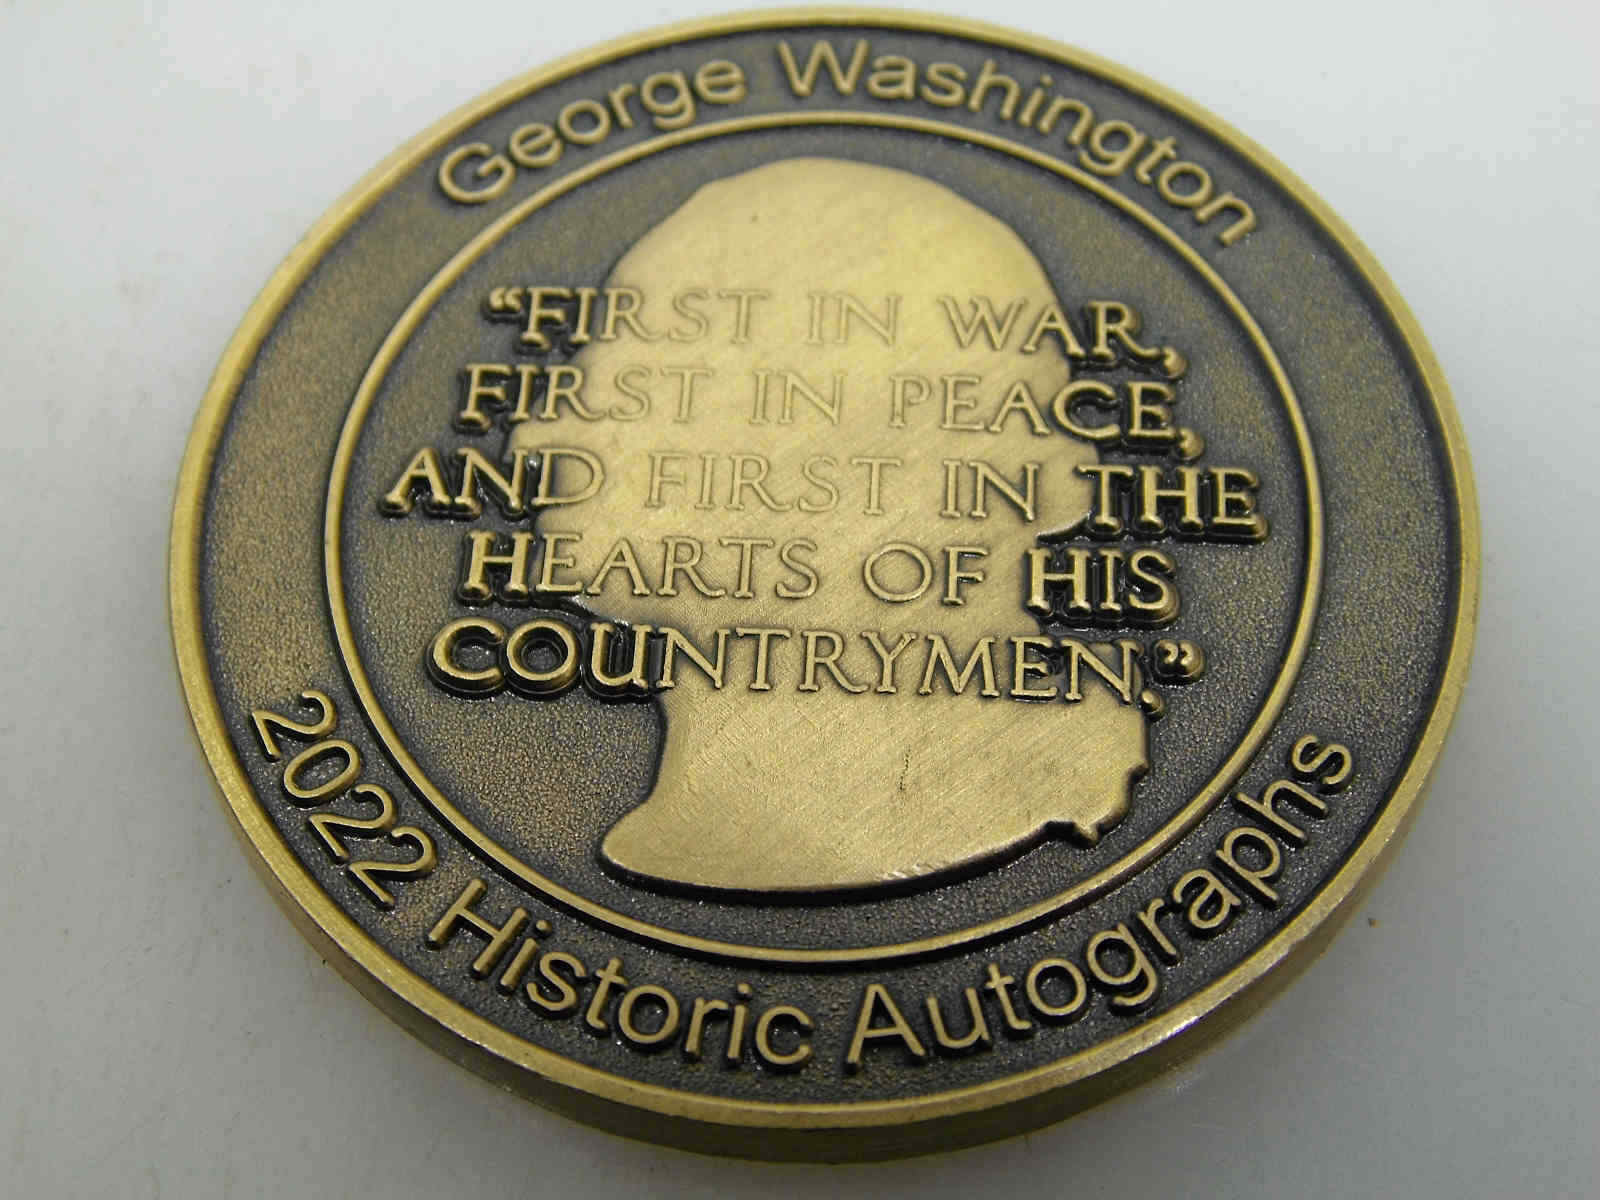 GEORGE WASHINGTON 2022 HISTORIC AUTOGRAPHS CHALLENGE COIN